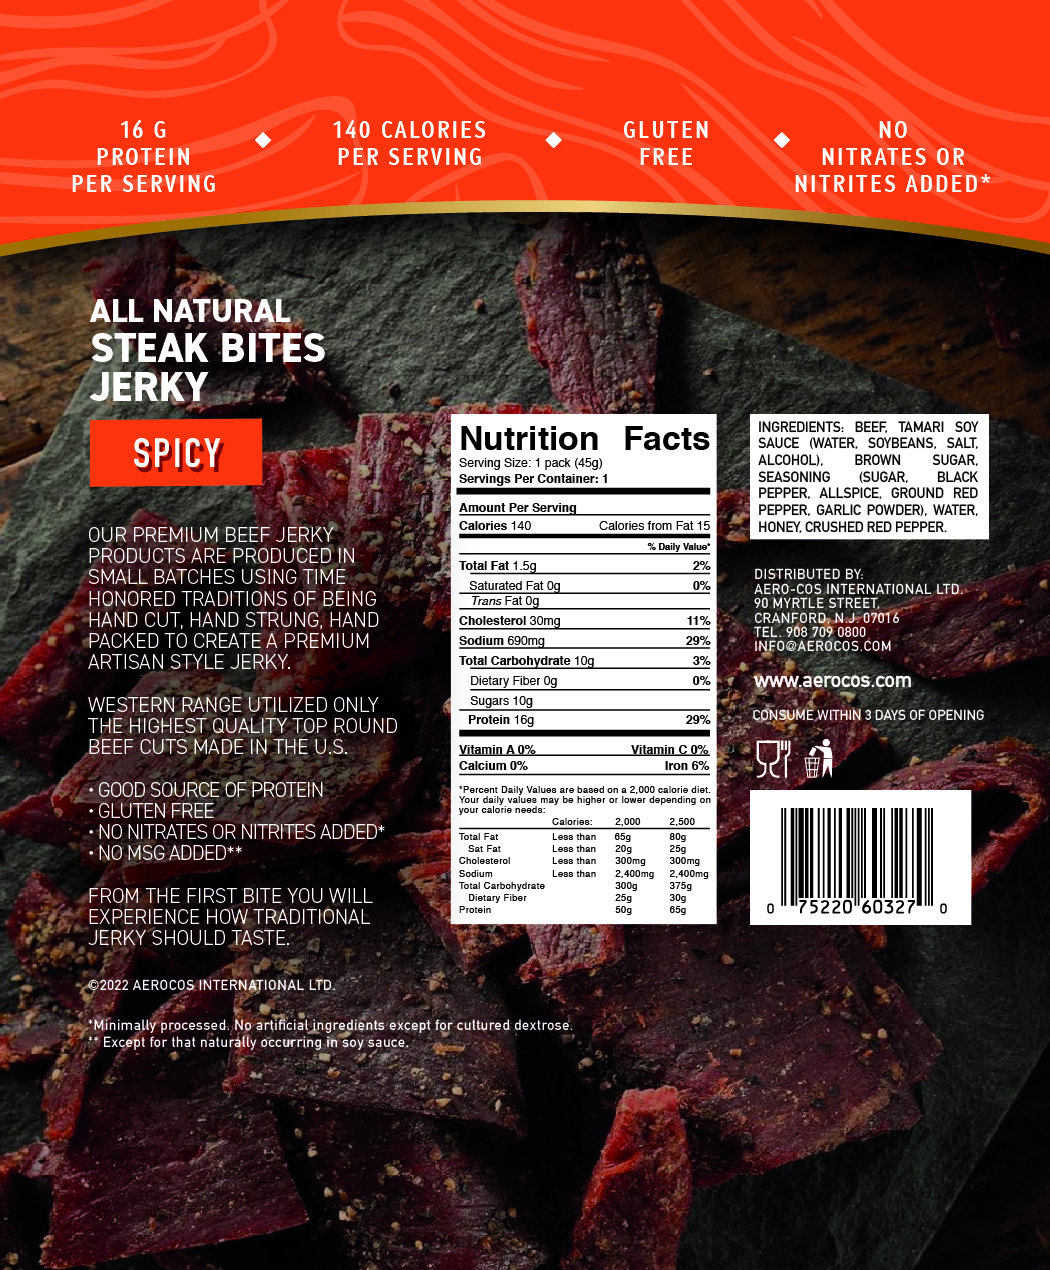 Western Range Beef Jerky Steak Bites - Spicy (Halal) 12 units per case 1.6 oz